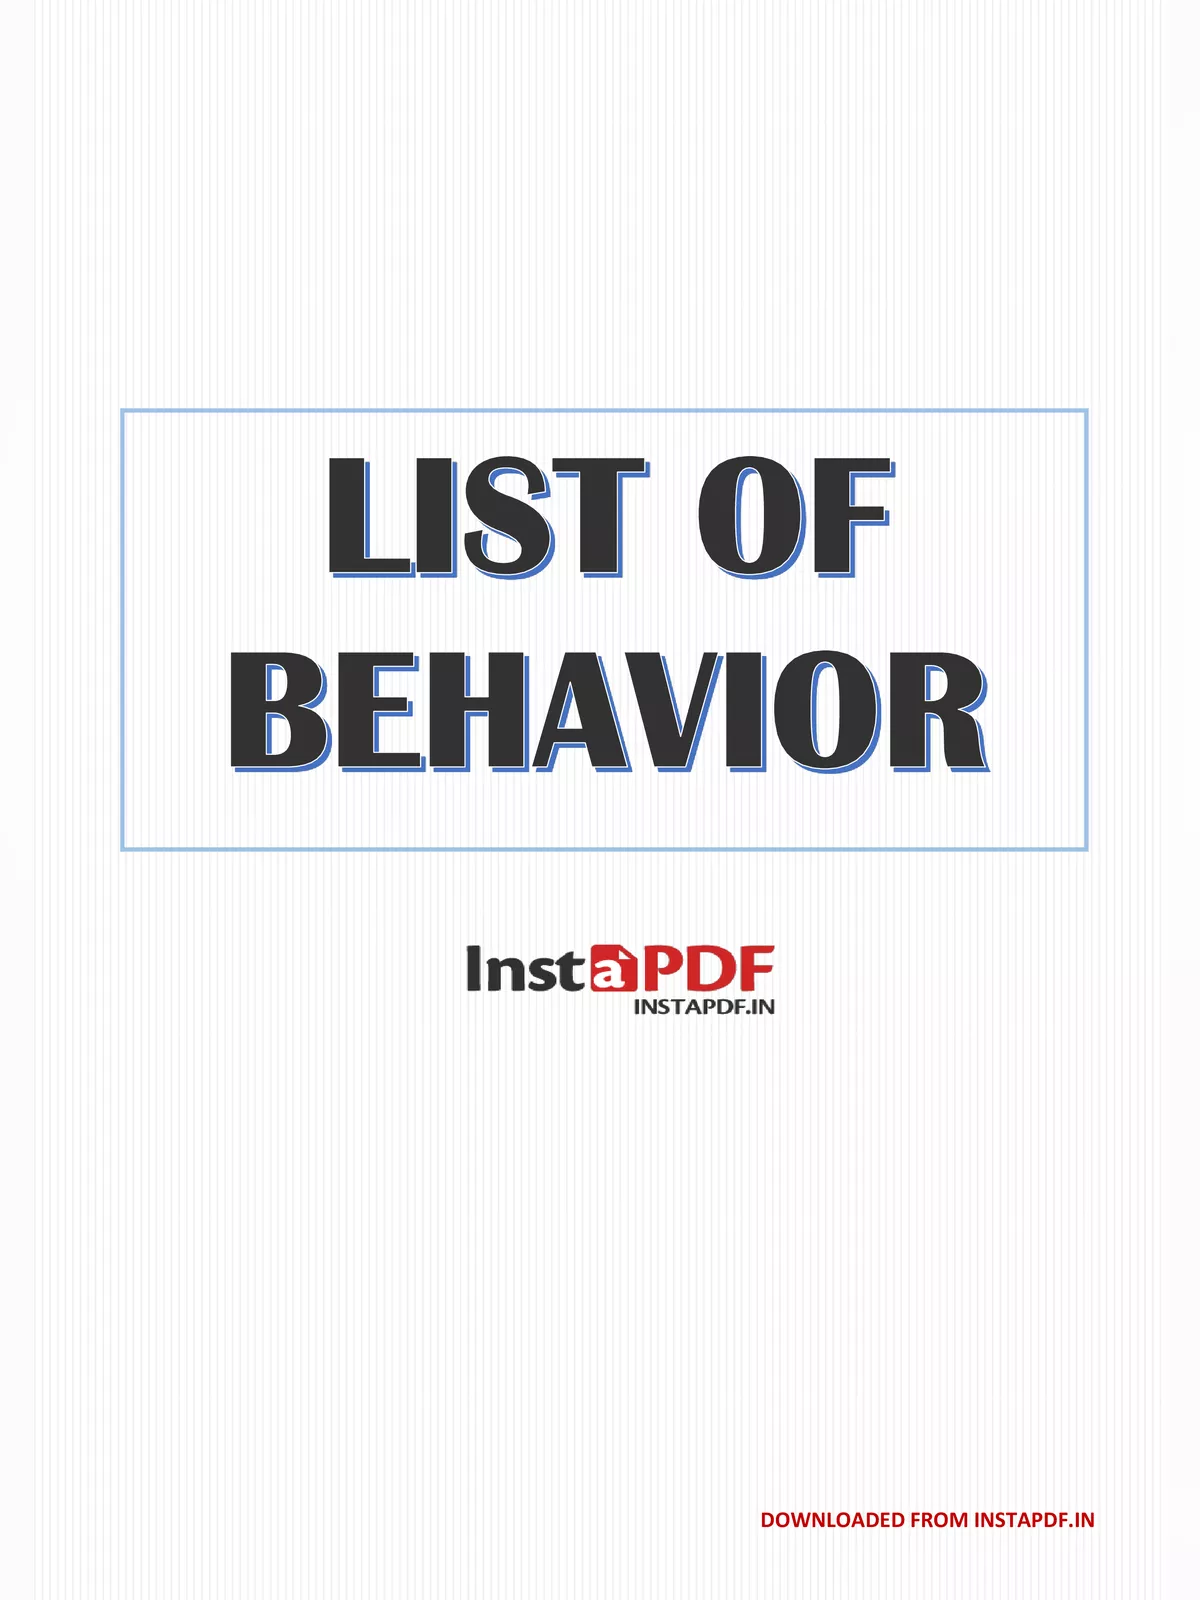 List of Behaviors (30+)